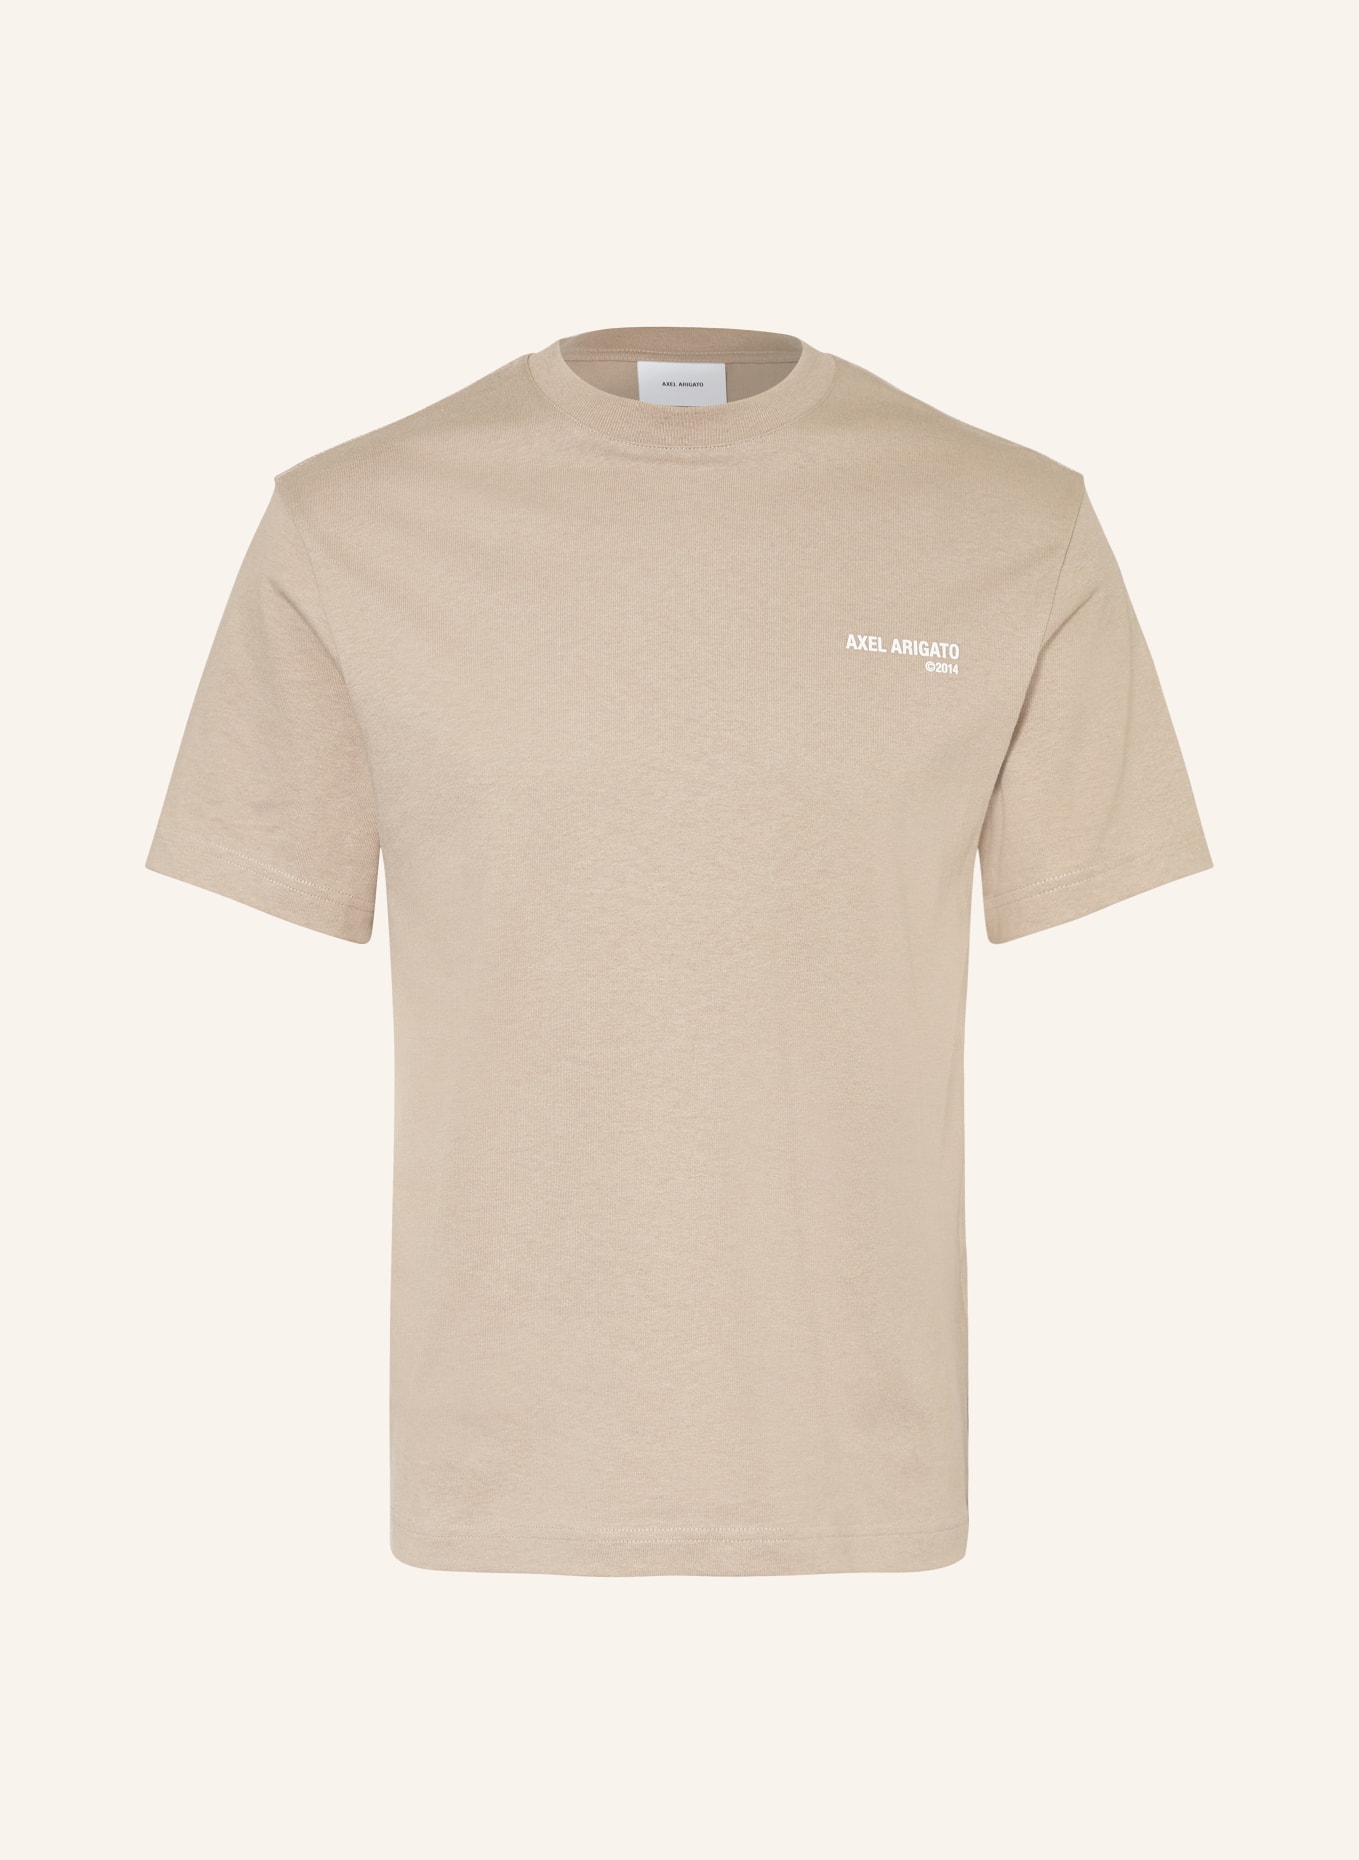 AXEL ARIGATO T-Shirt LEGACY, Farbe: TAUPE (Bild 1)